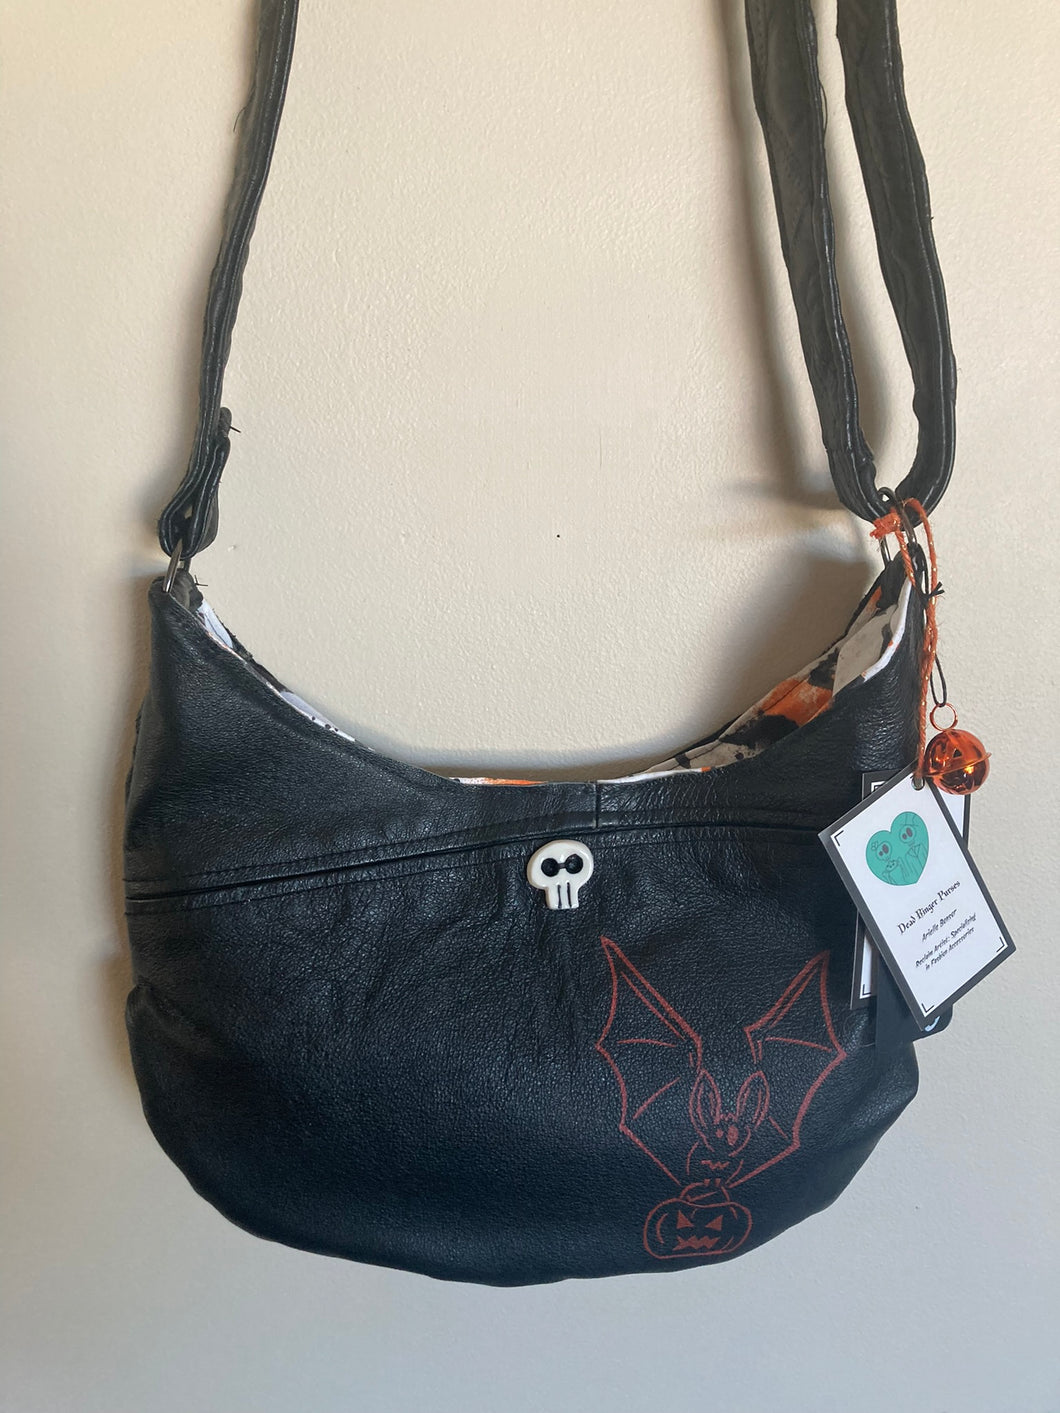 Black Crescent Moon bag with a orange print of 